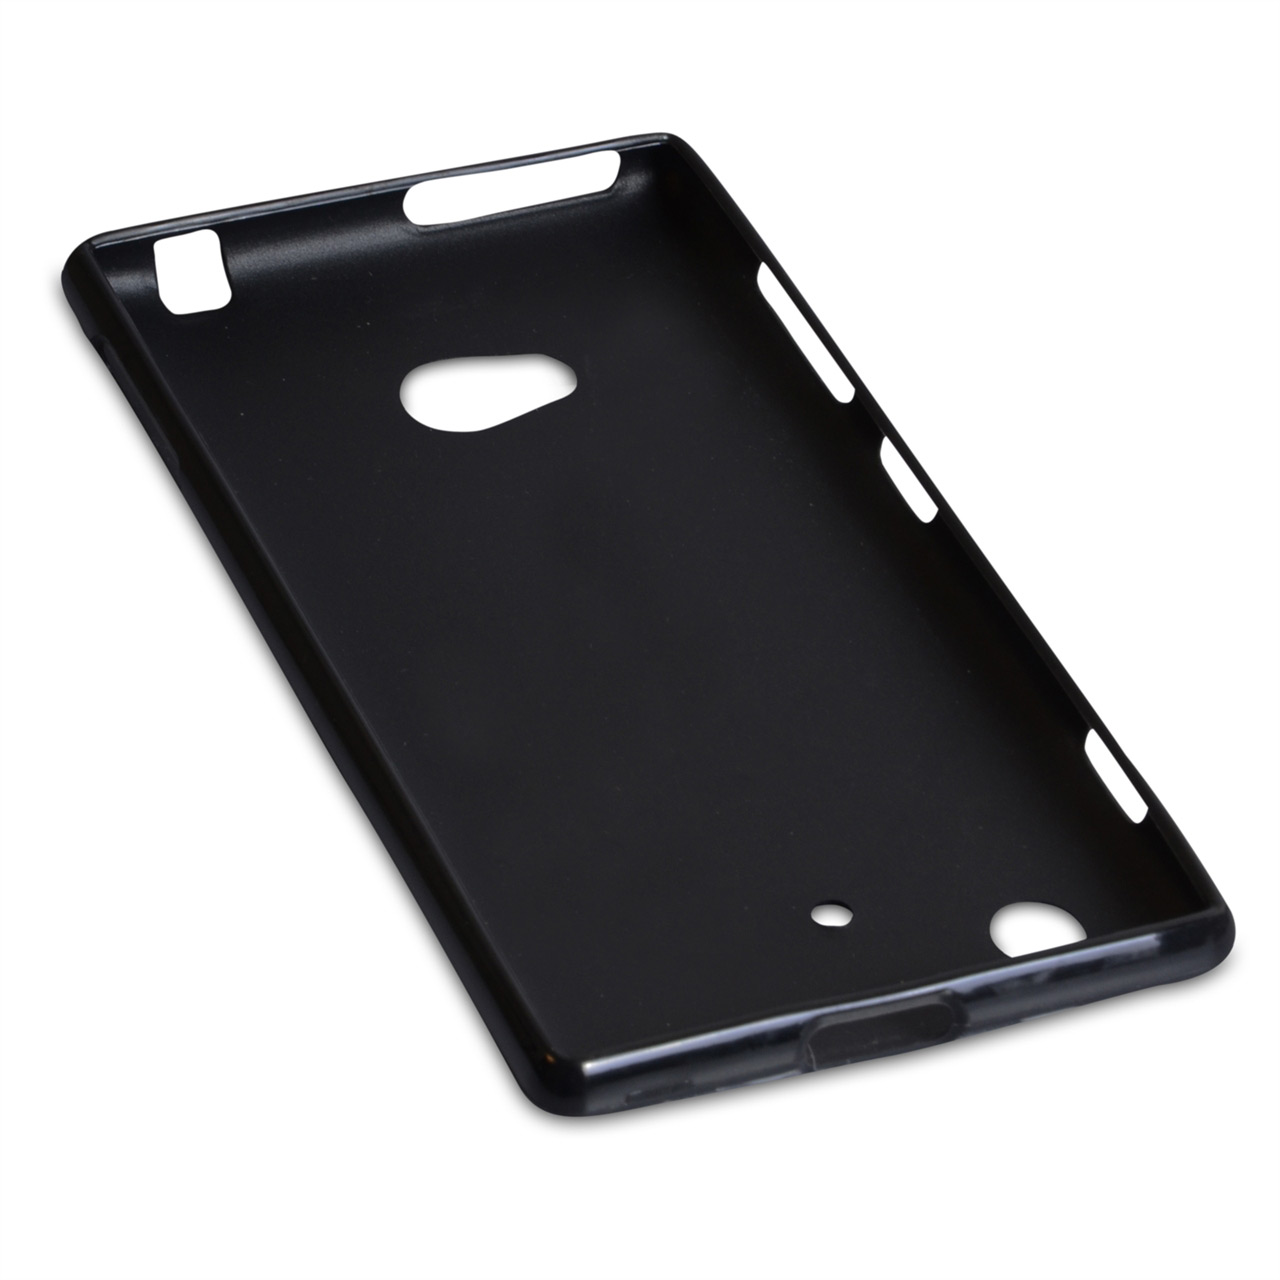 YouSave Accessories Nokia Lumia 720 Polka Dot Hard Case - Black